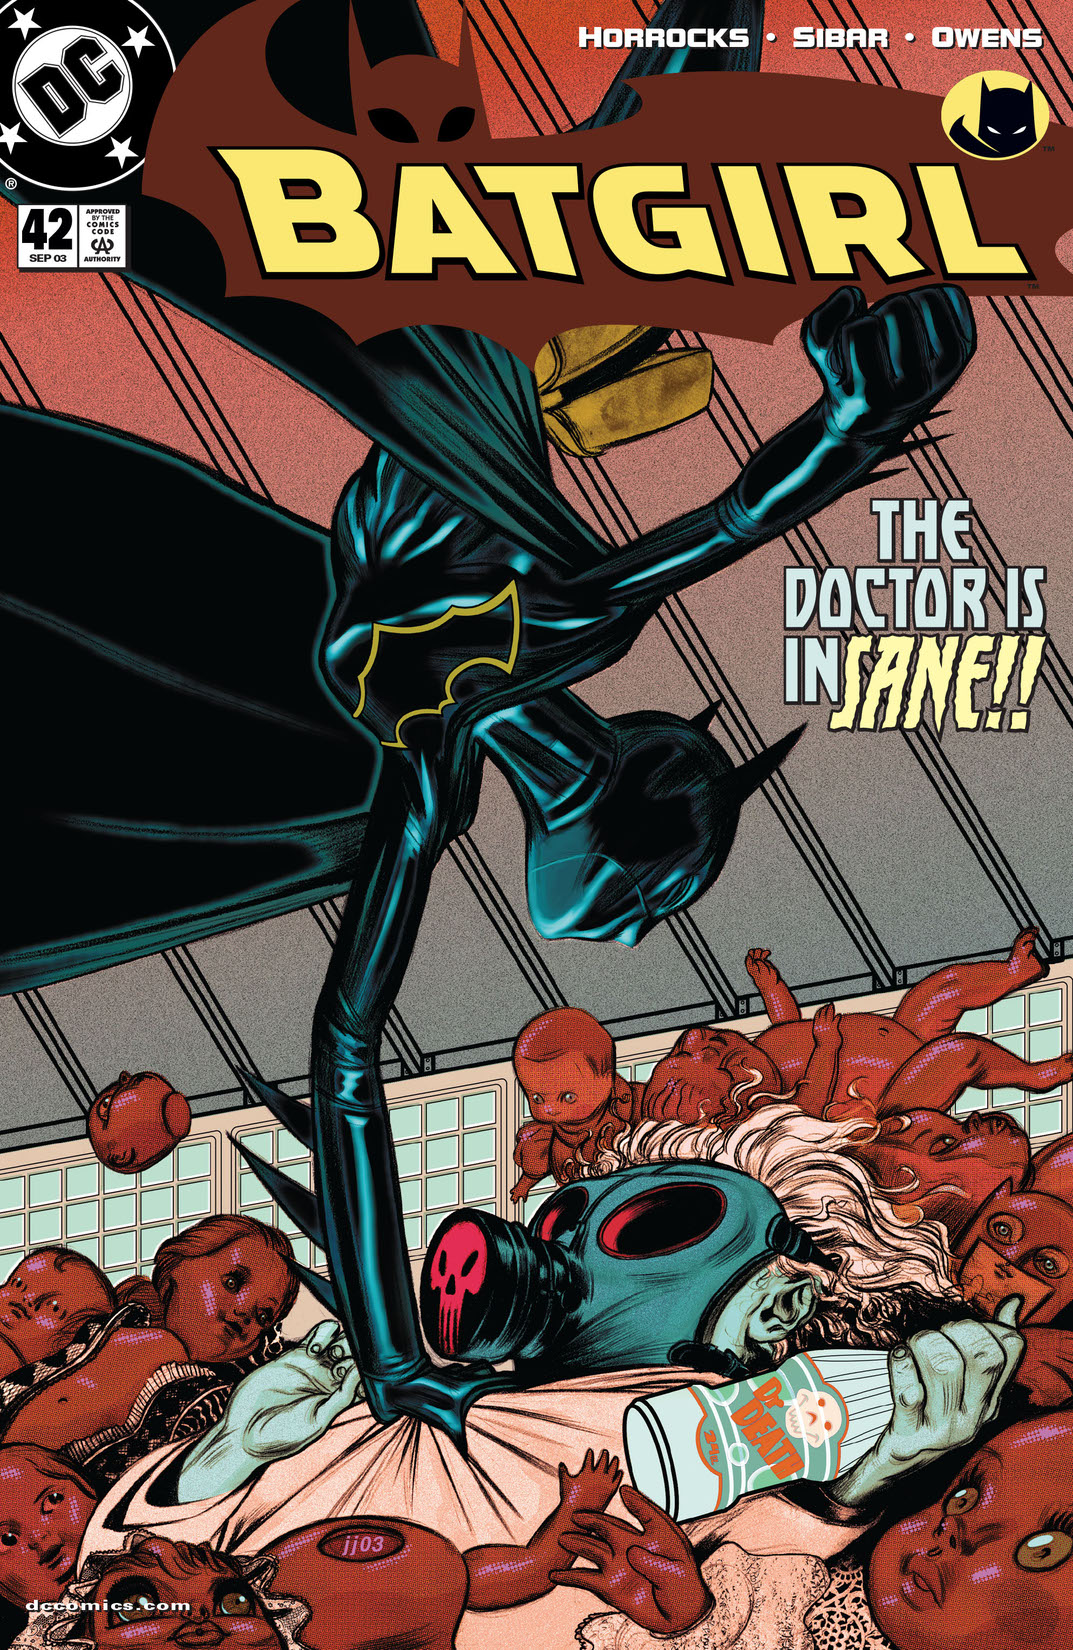 Batgirl (2000-) #42 preview images